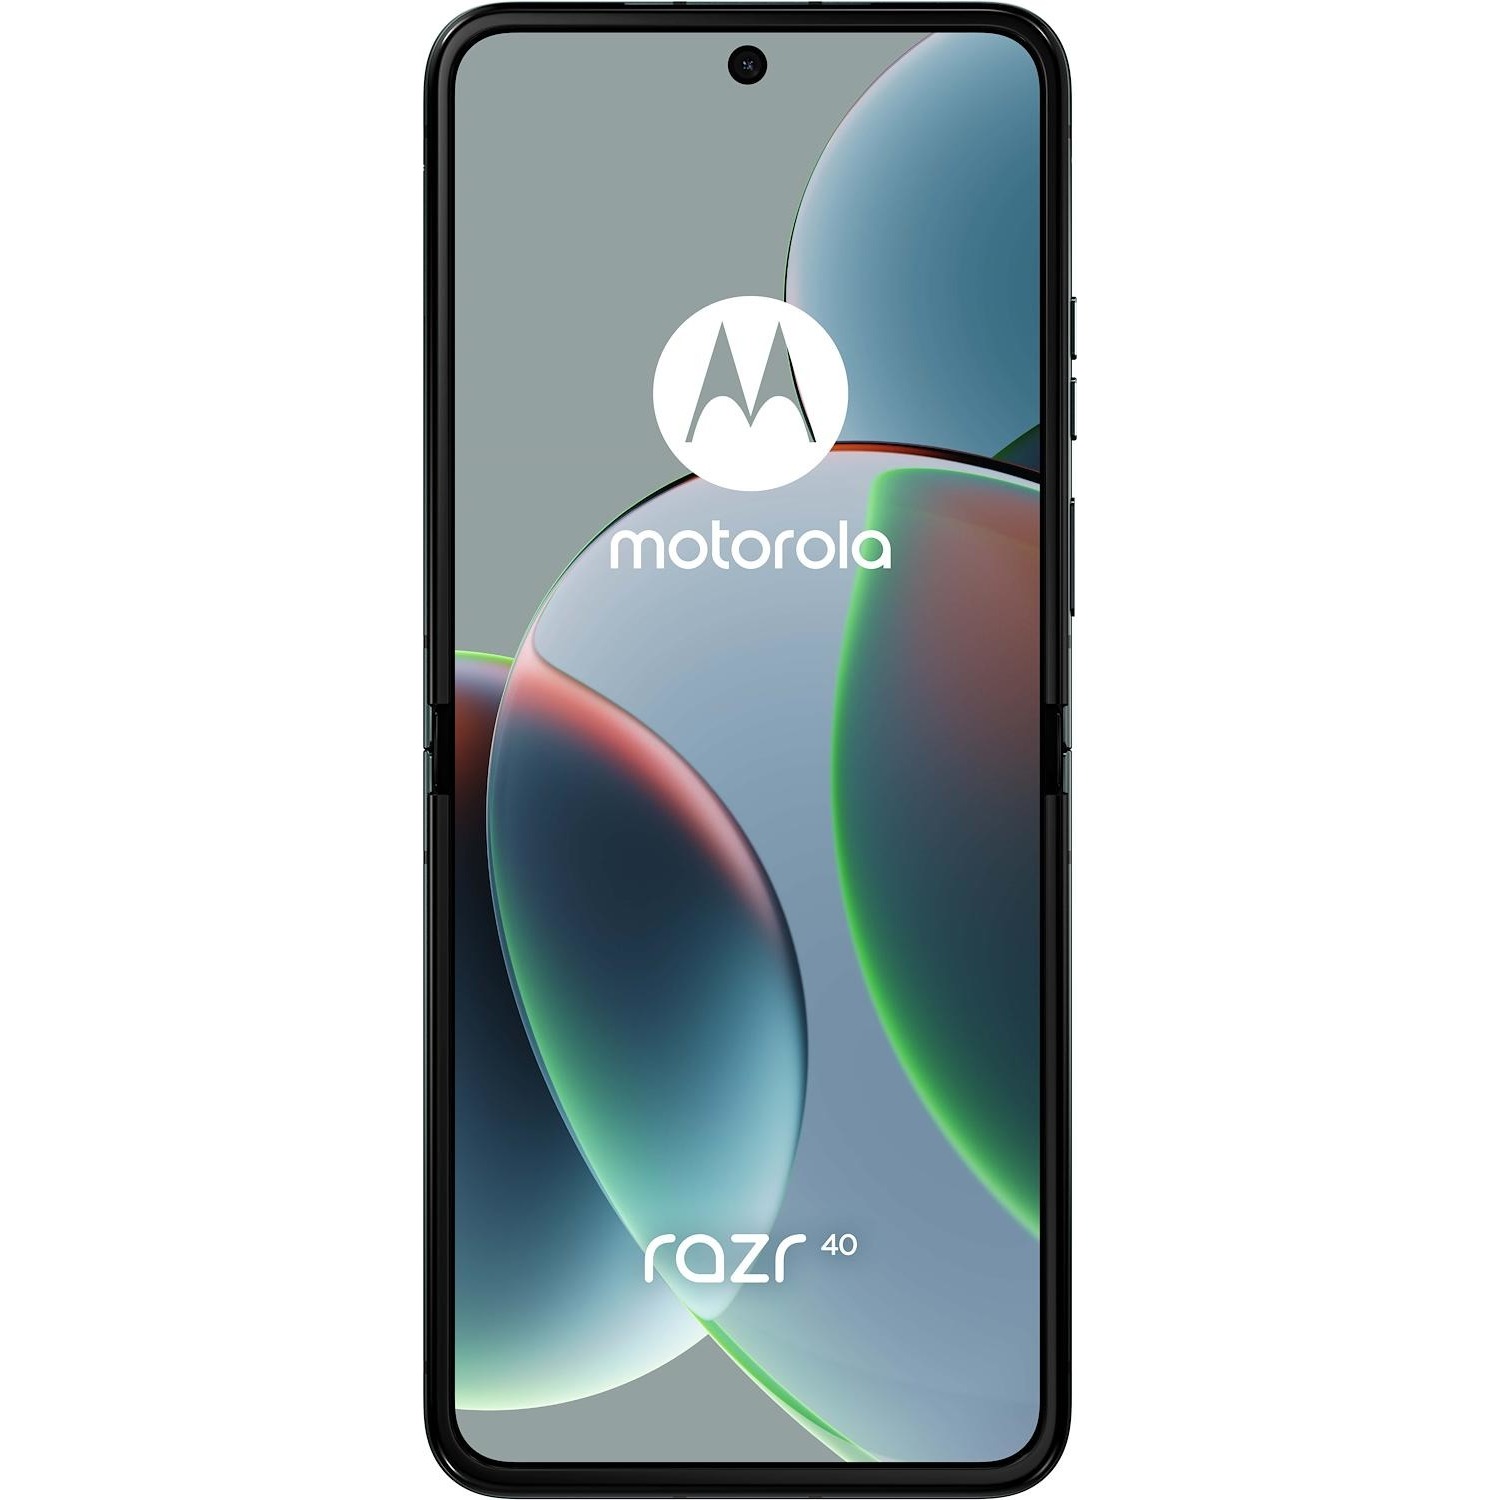 Immagine per Smartphone Motorola Razr 40 sage green verde da DIMOStore